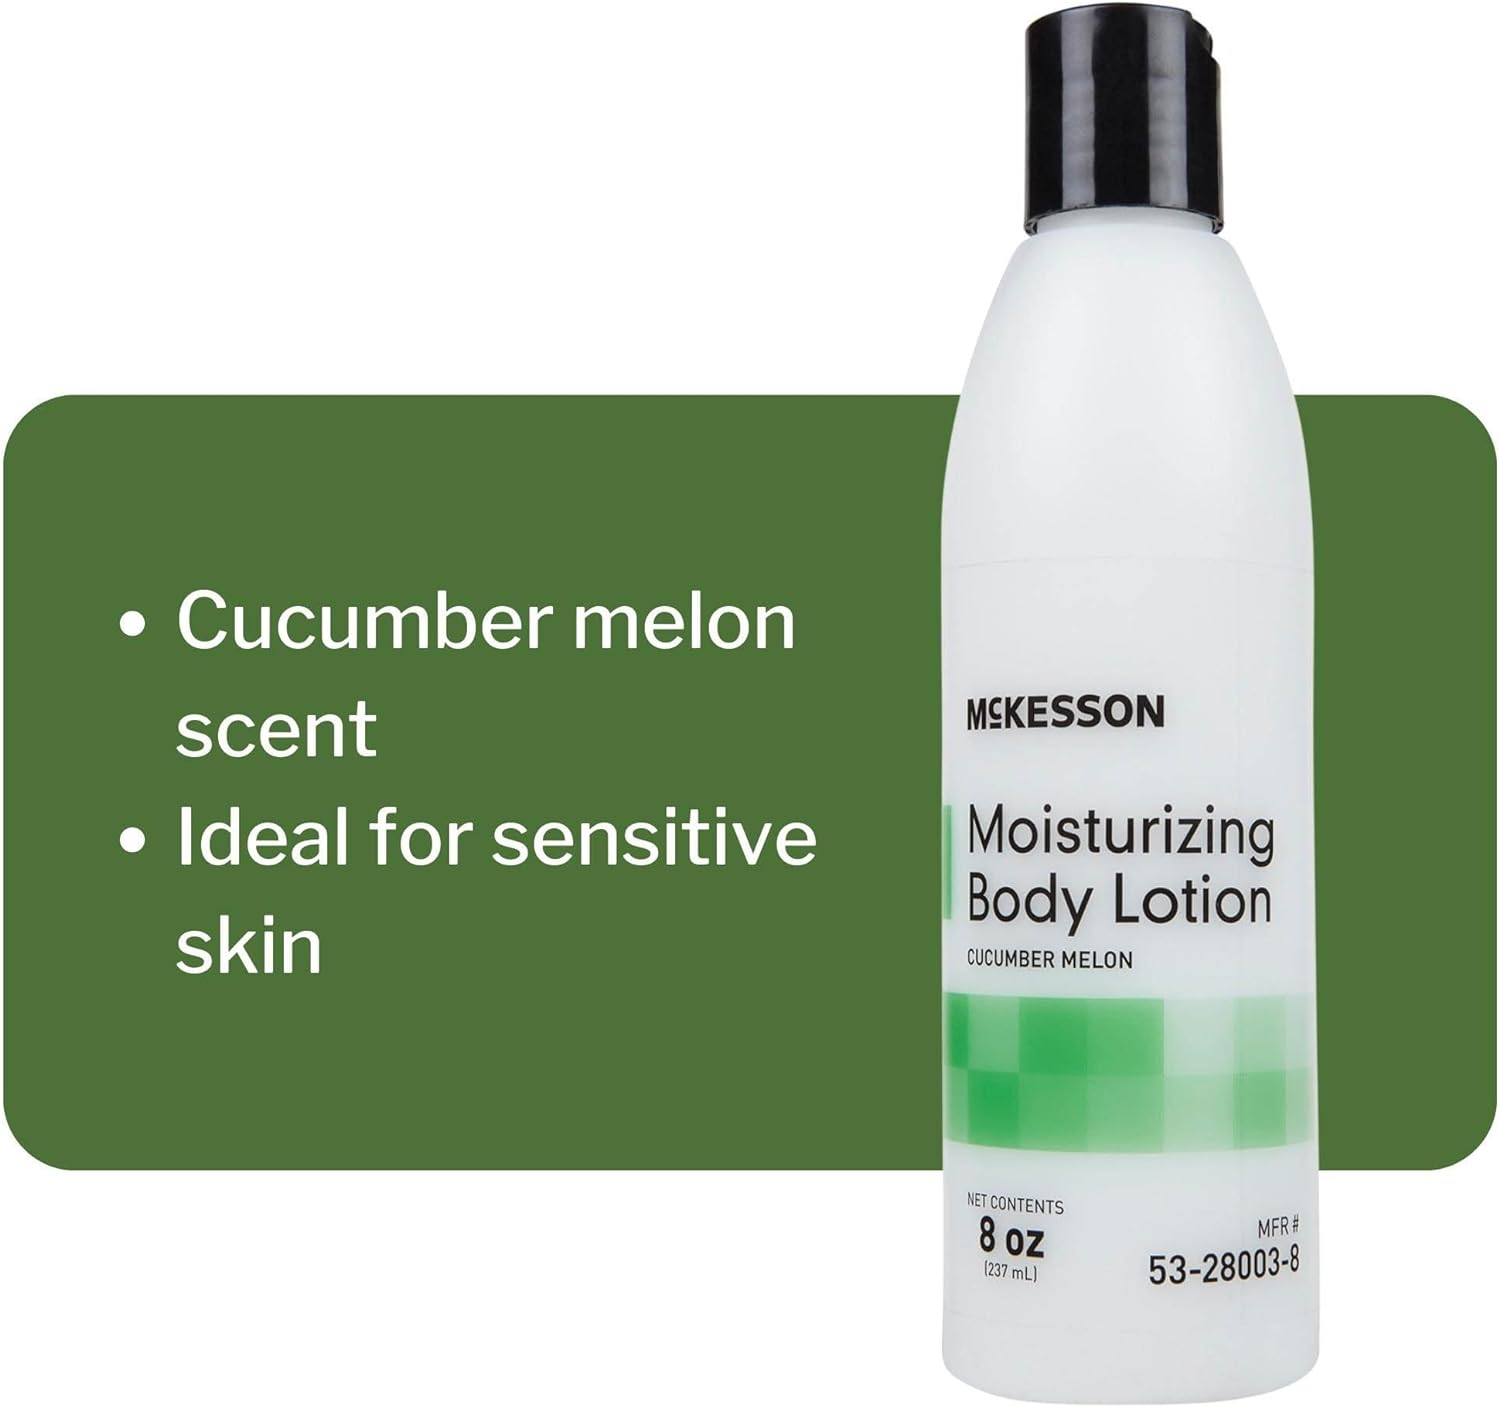 McKesson Moisturizing Body Lotion, Cucumber Melon Scent, 8 oz, 1 Count